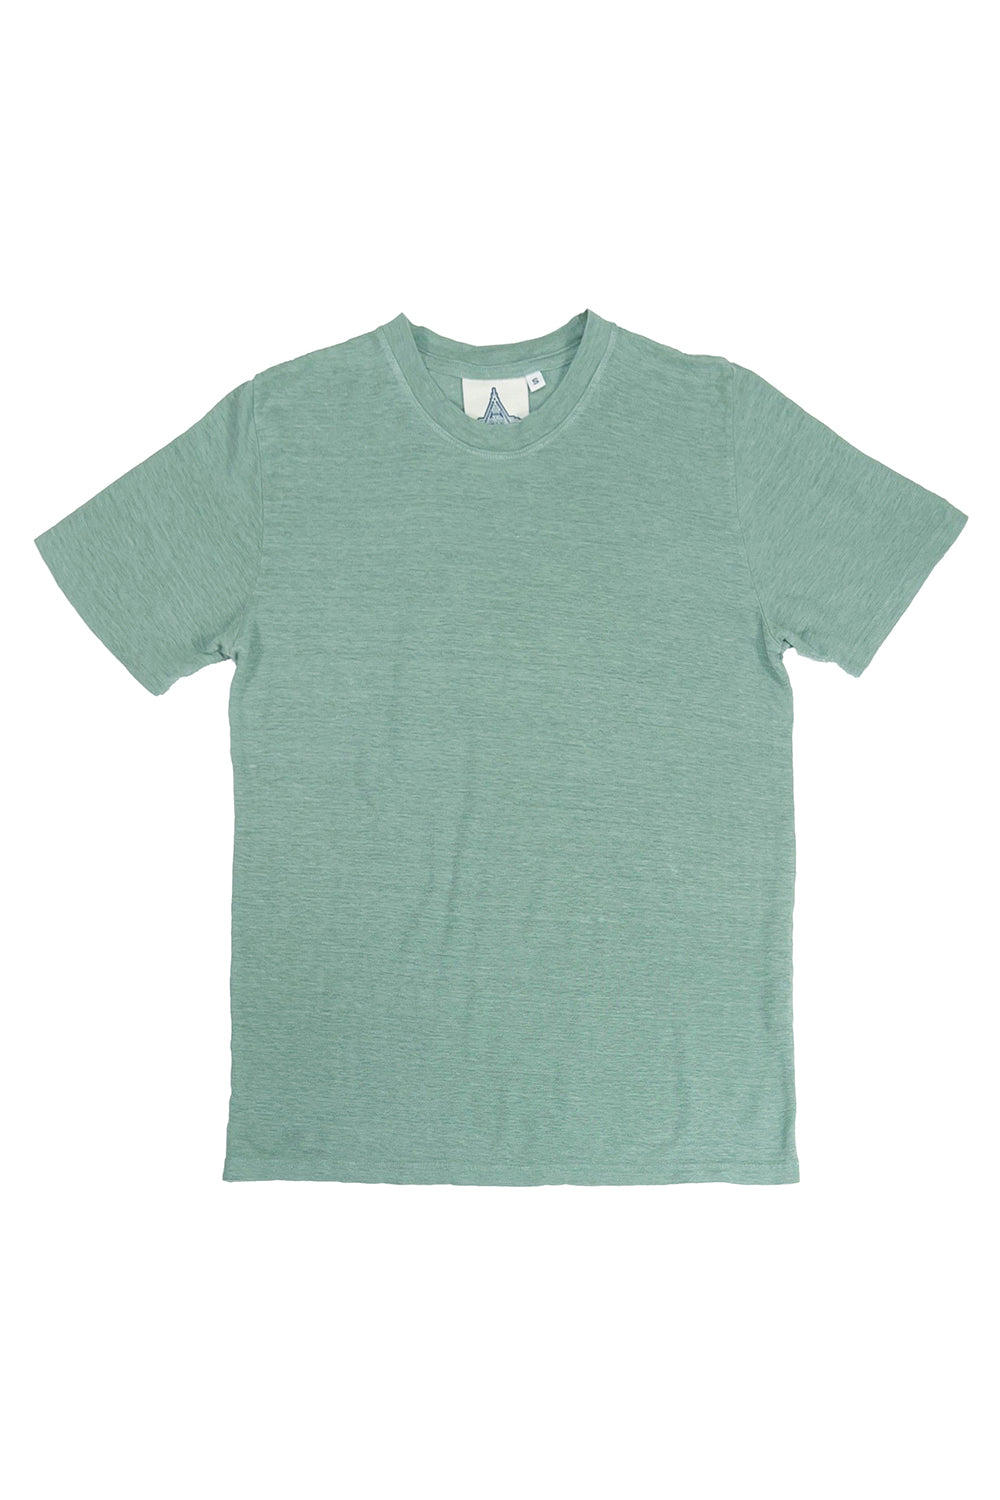 Mana 10 - 100% Hemp Tee | Jungmaven Hemp Clothing & Accessories / Color: Sage Green